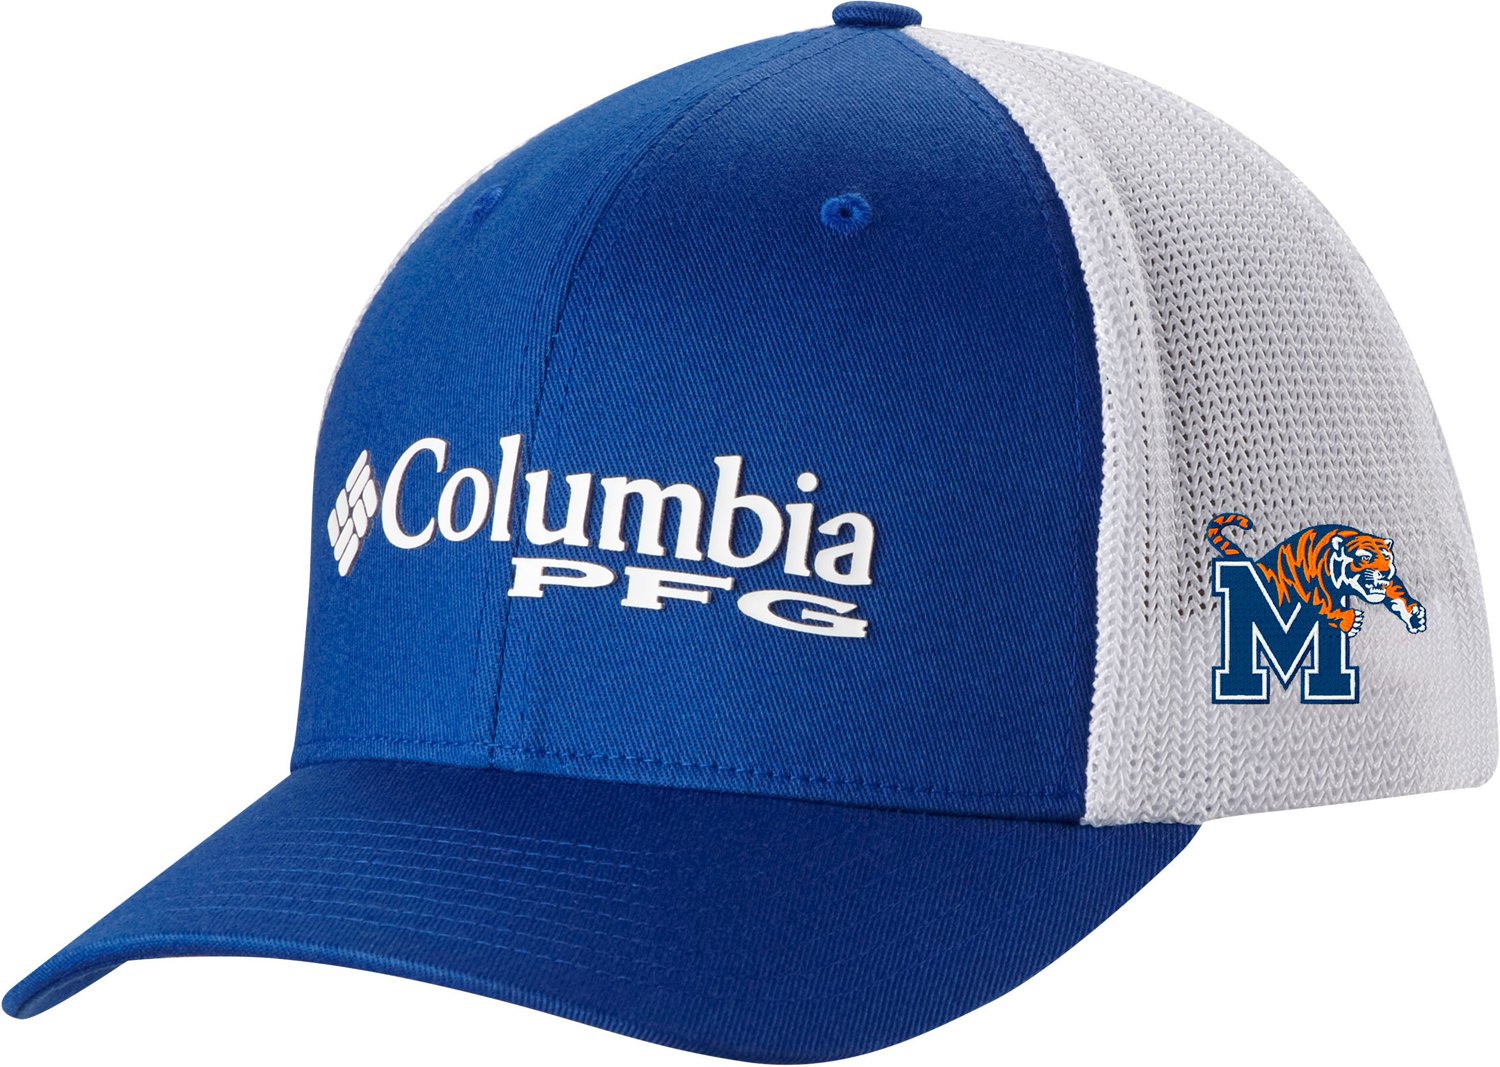 Columbia Sportswear Men's University of Memphis PFG Ball Cap